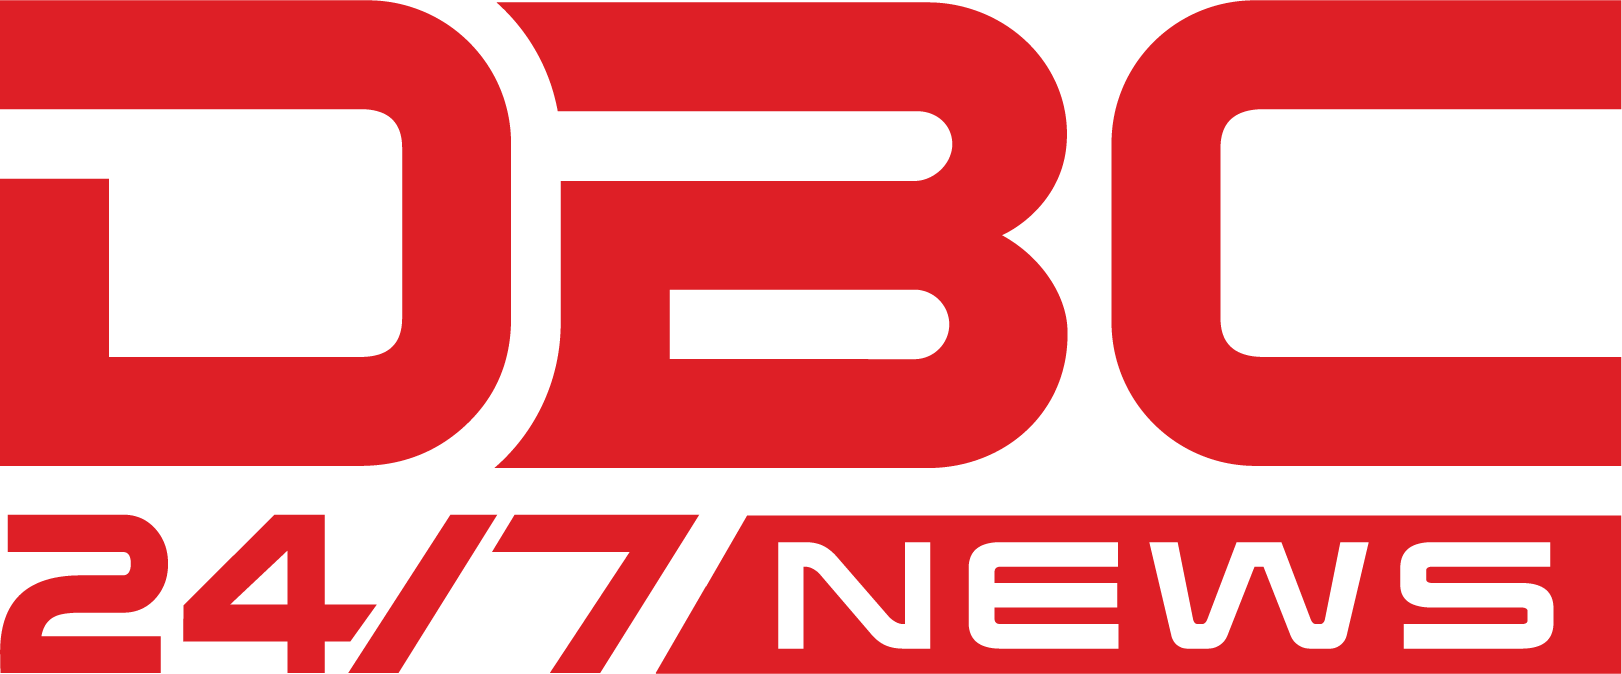 DBC логотип. Логотип ДБС. TV News logo. DW News logo. Dw tv